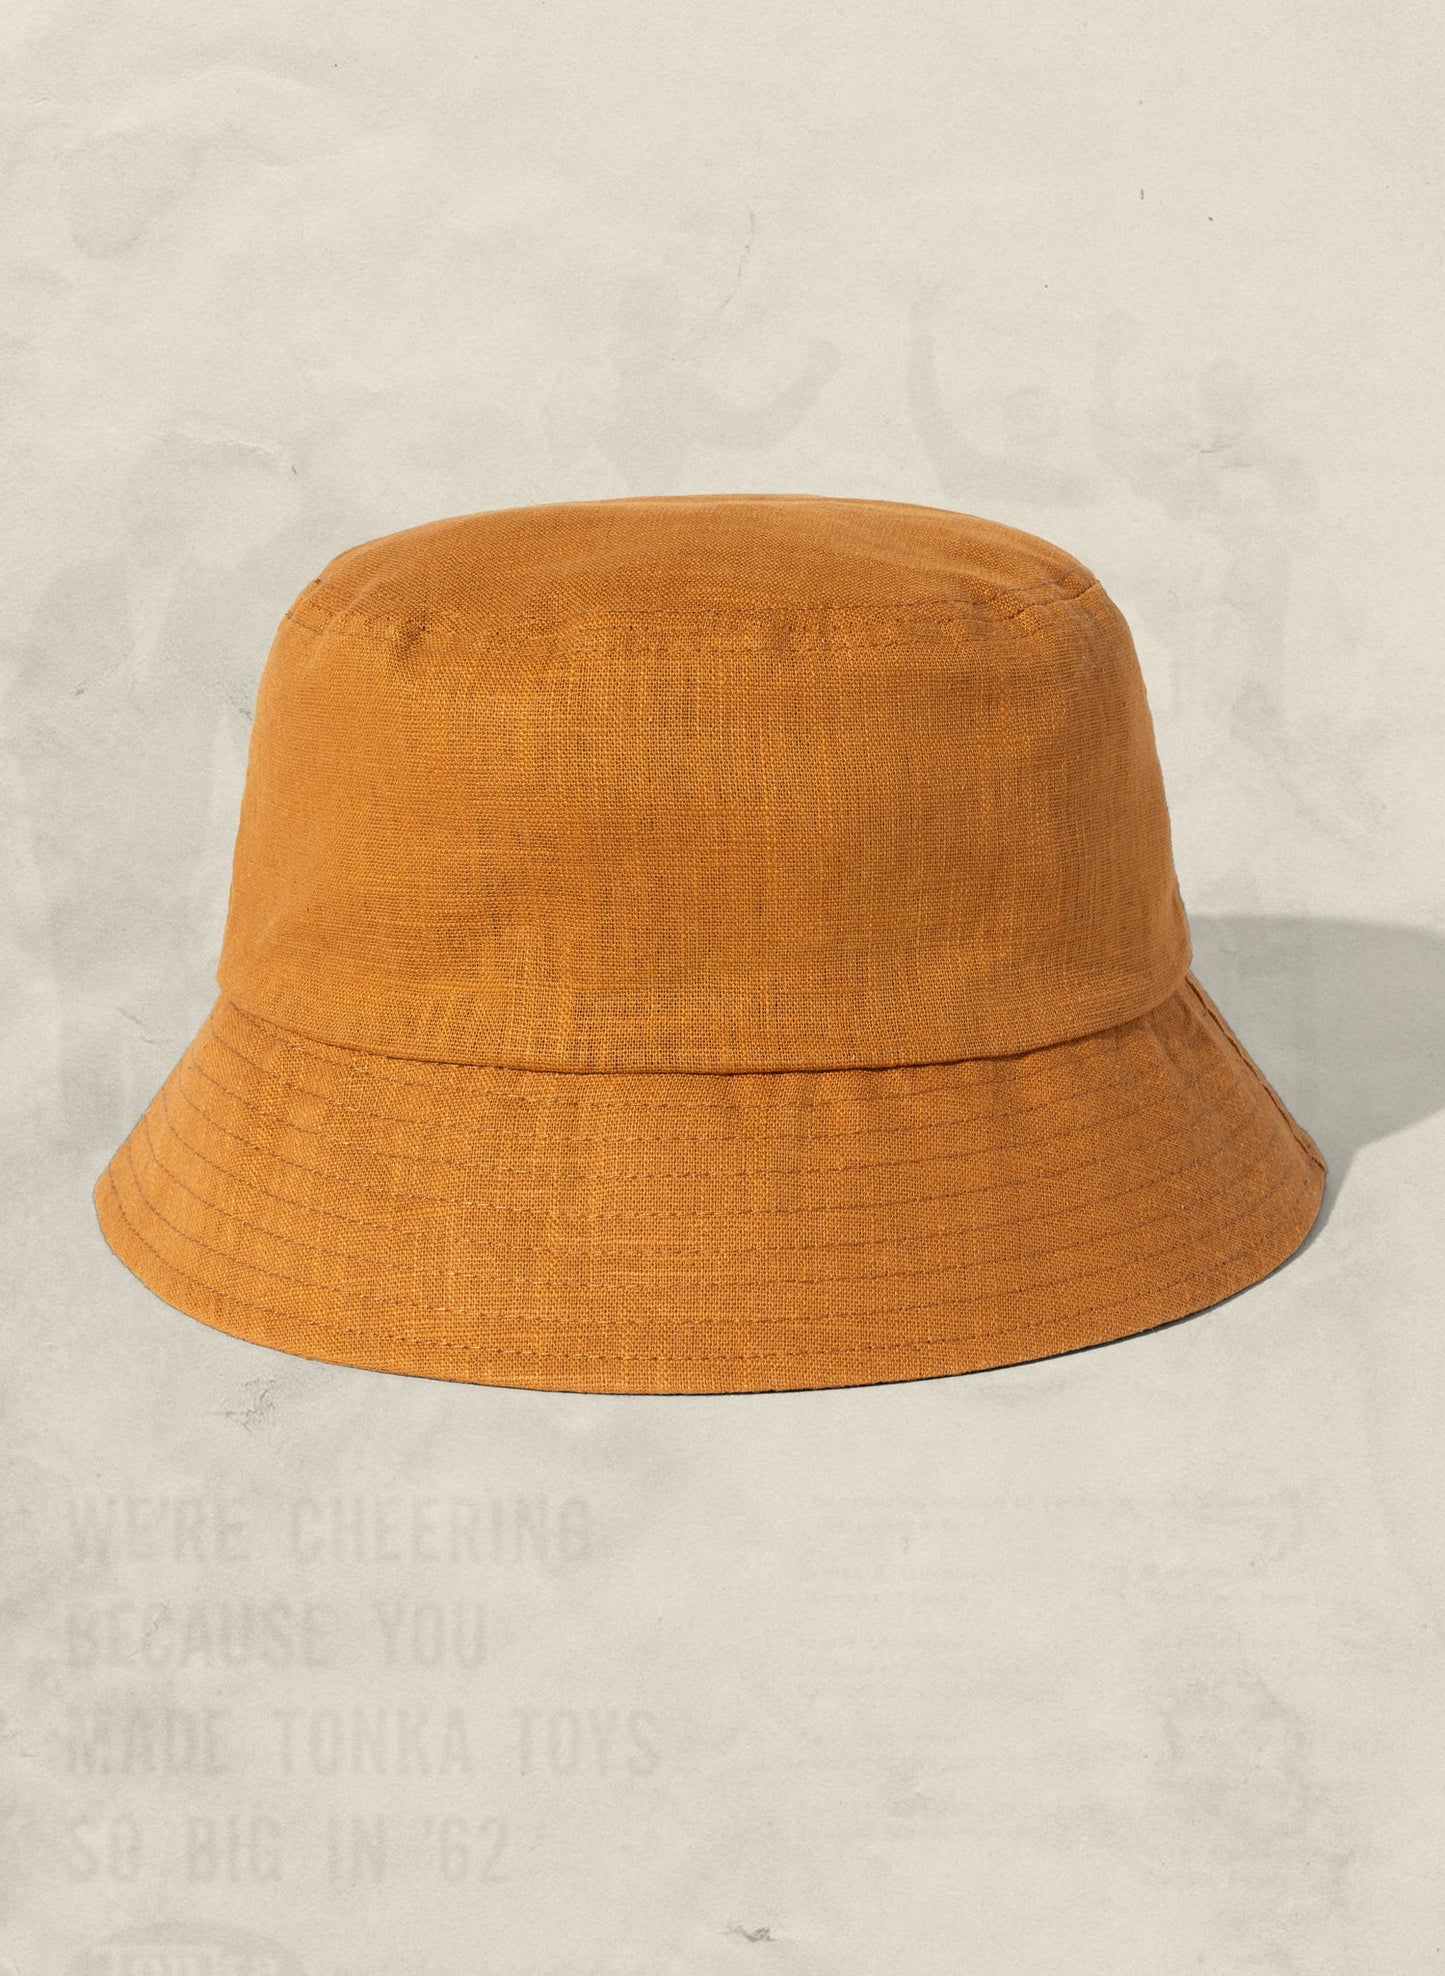 Weld Mfg Hemp Bucket Hat - Vintage Inspired Beach Sun Hat - Rust